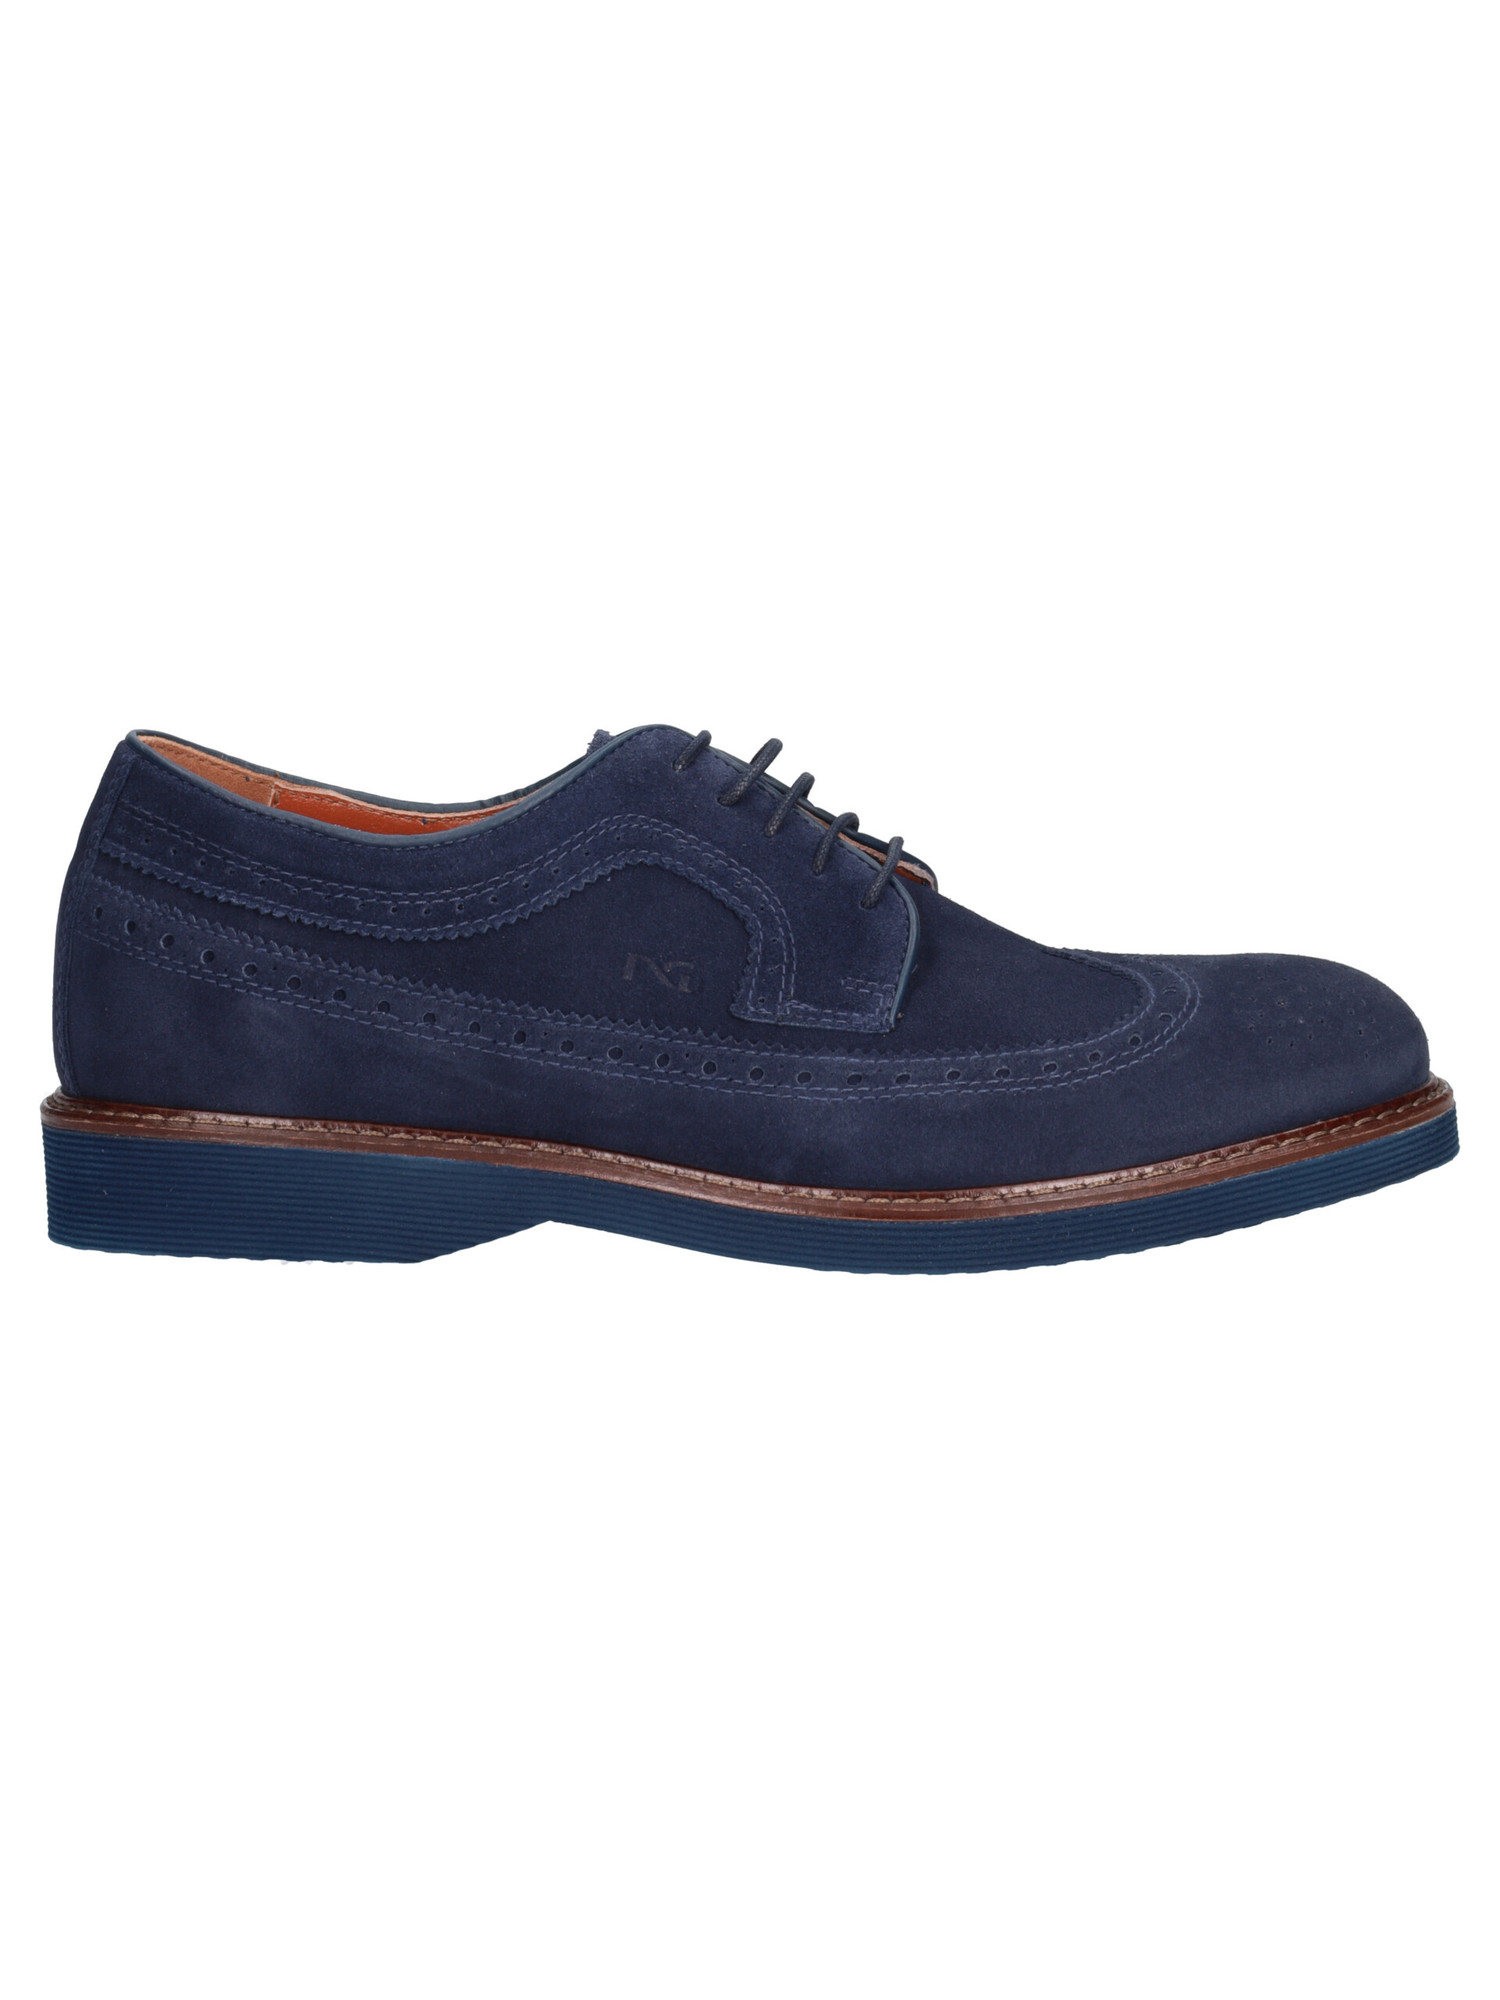 scarpa-stringata-nero-giardini-da-uomo-blu-661b8c